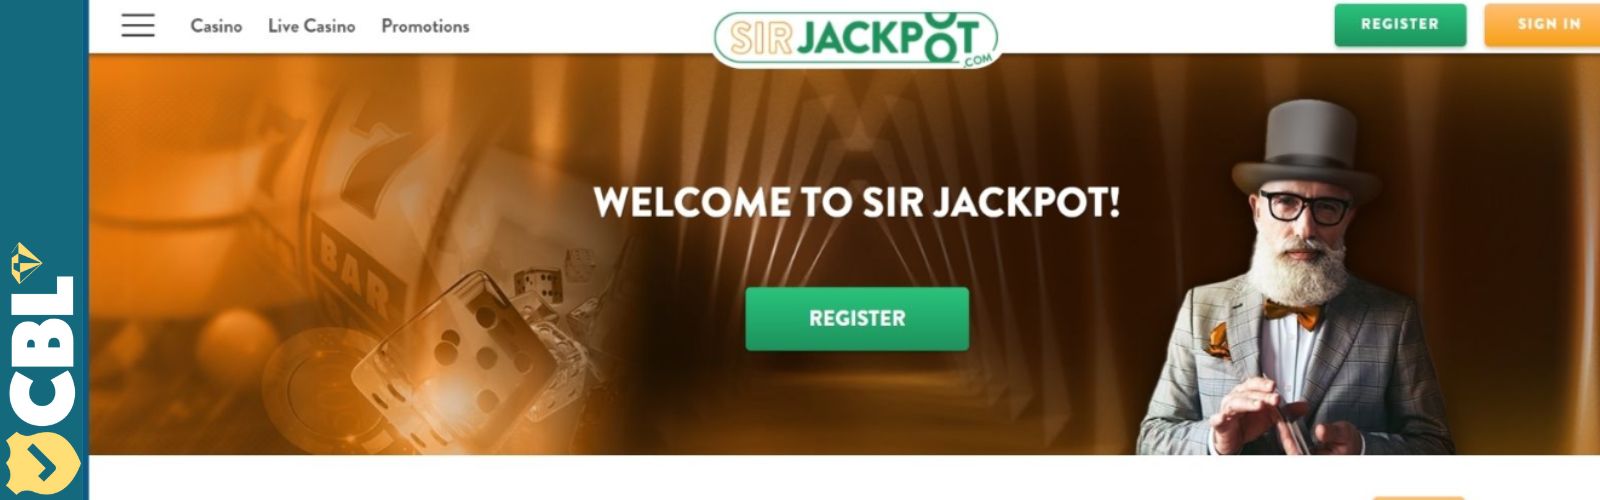 Play at Sir Jackpot online casino India